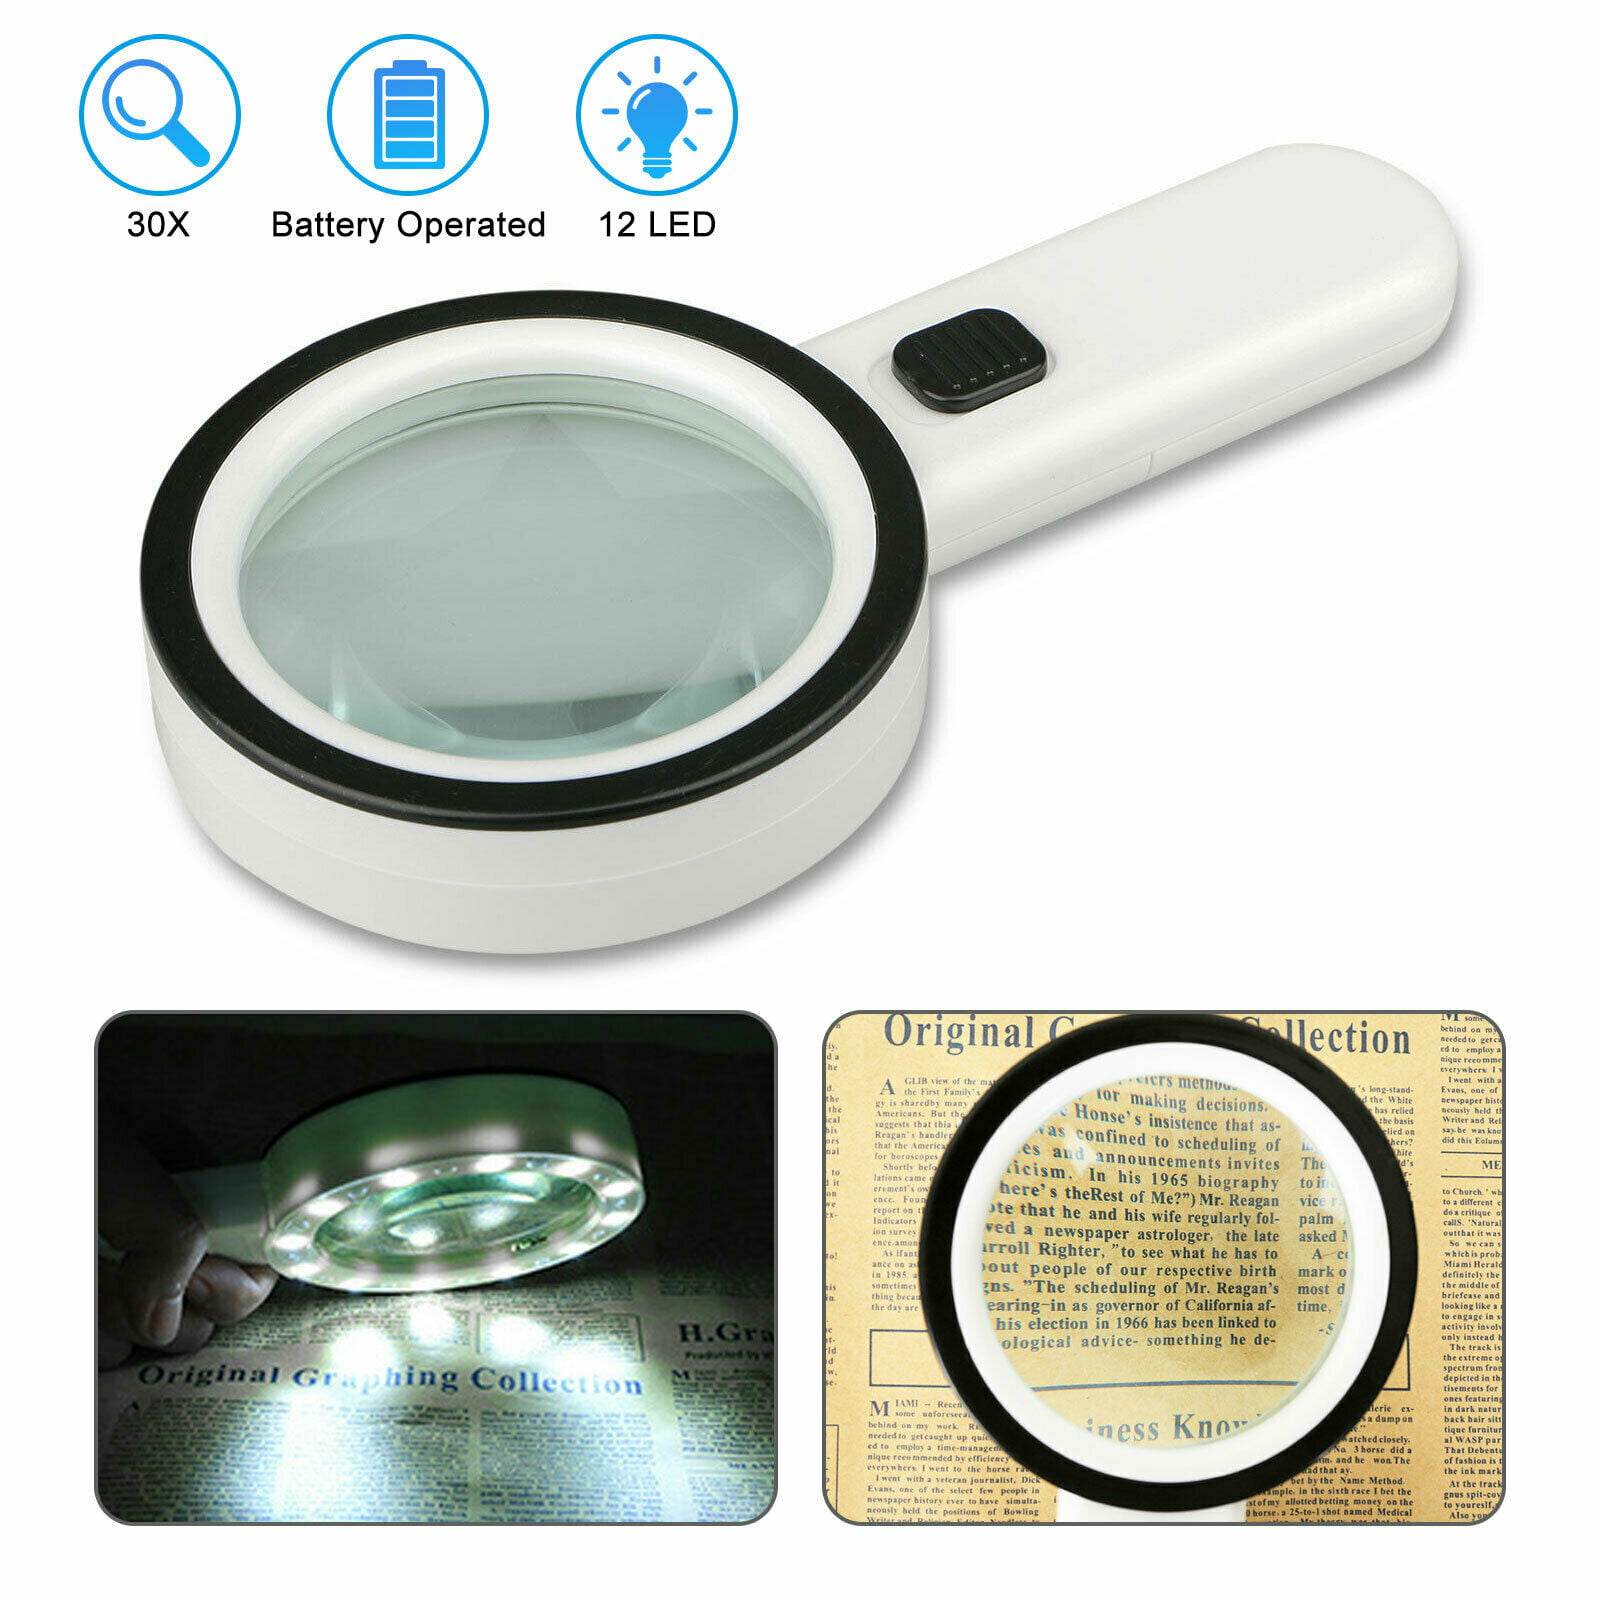 30X Jumbo Handheld Magnifying Glass w/ 12 Bright LED Light Illuminated Magnifier